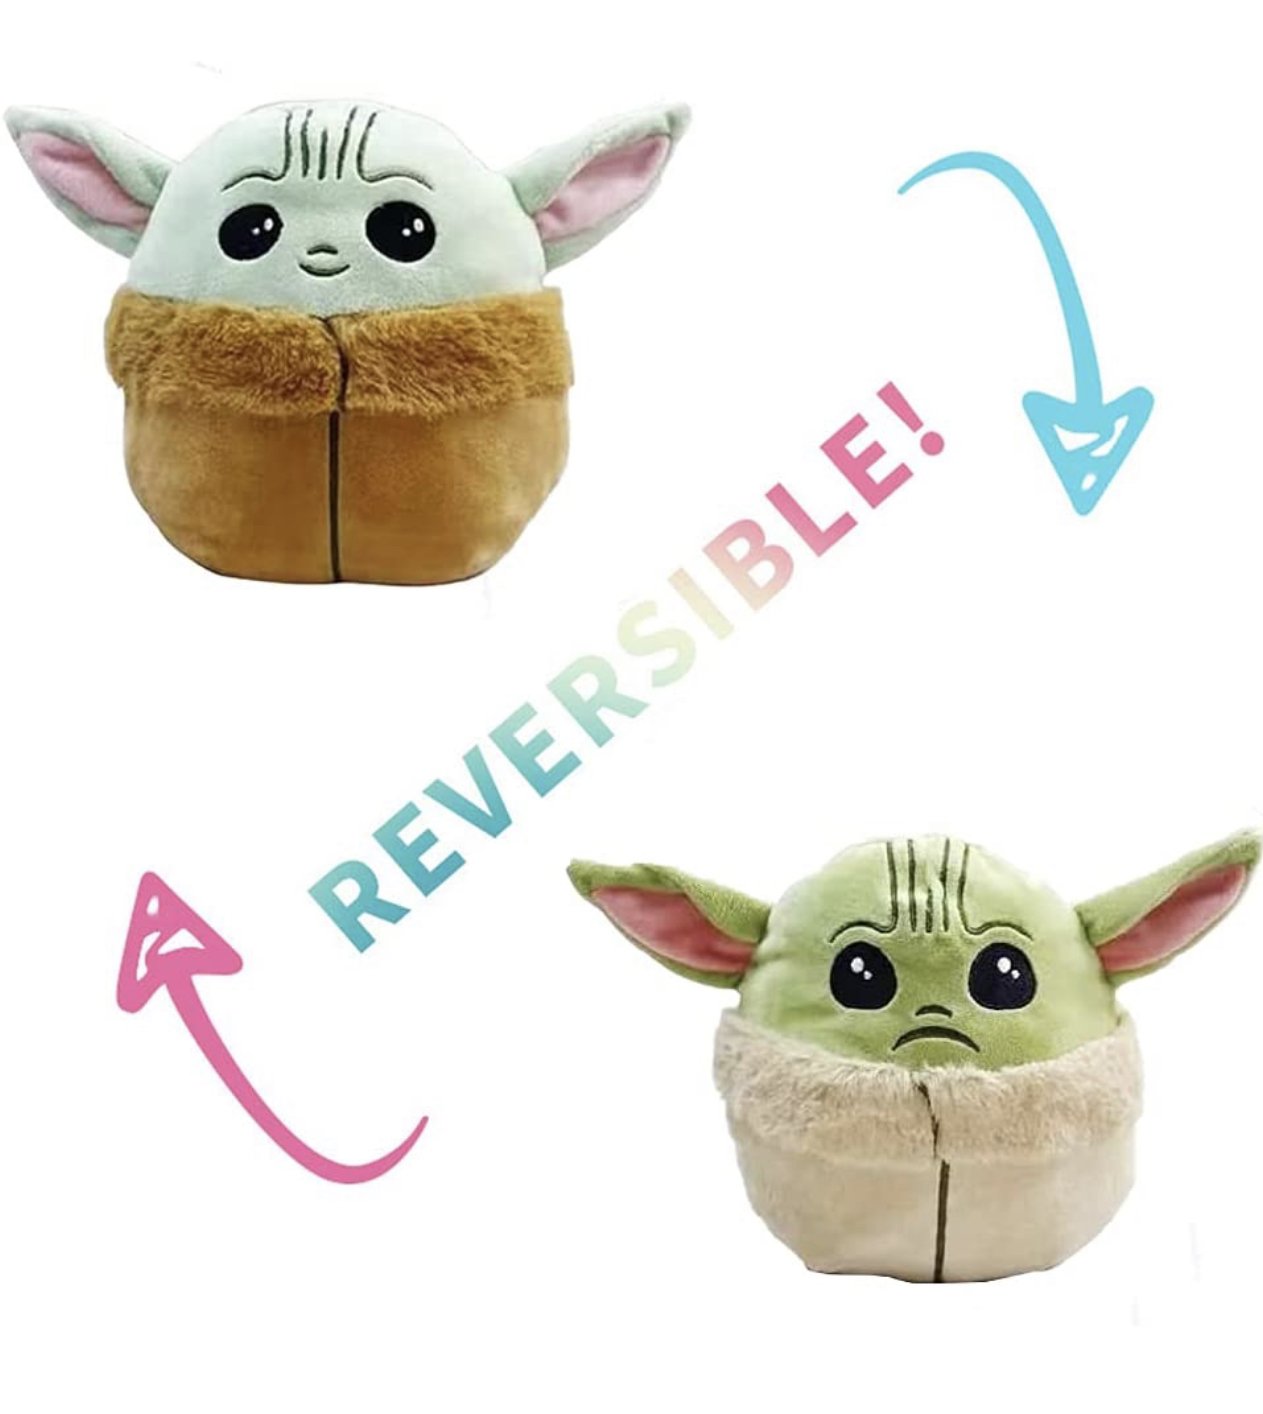 Reversible Yoda Plush